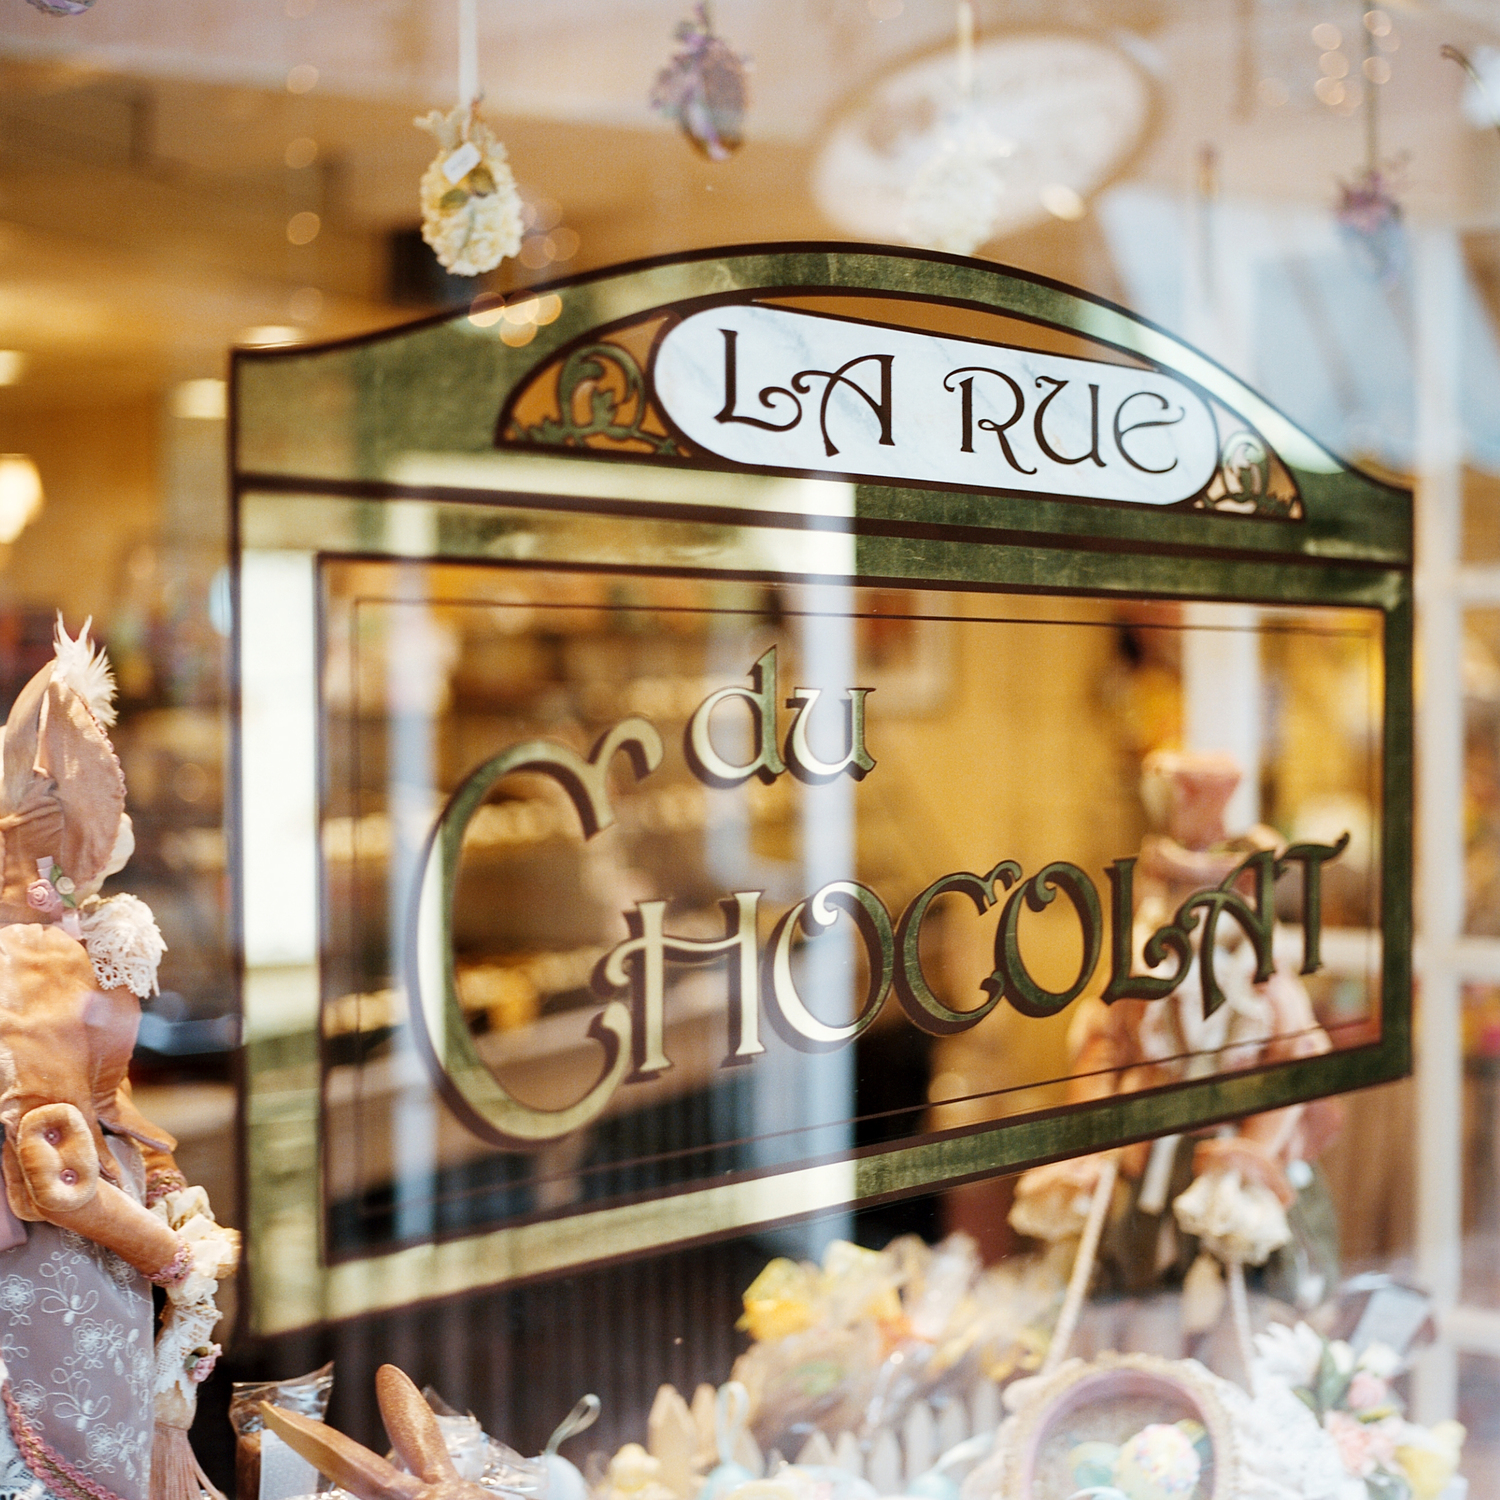 La Rue du Chocolat